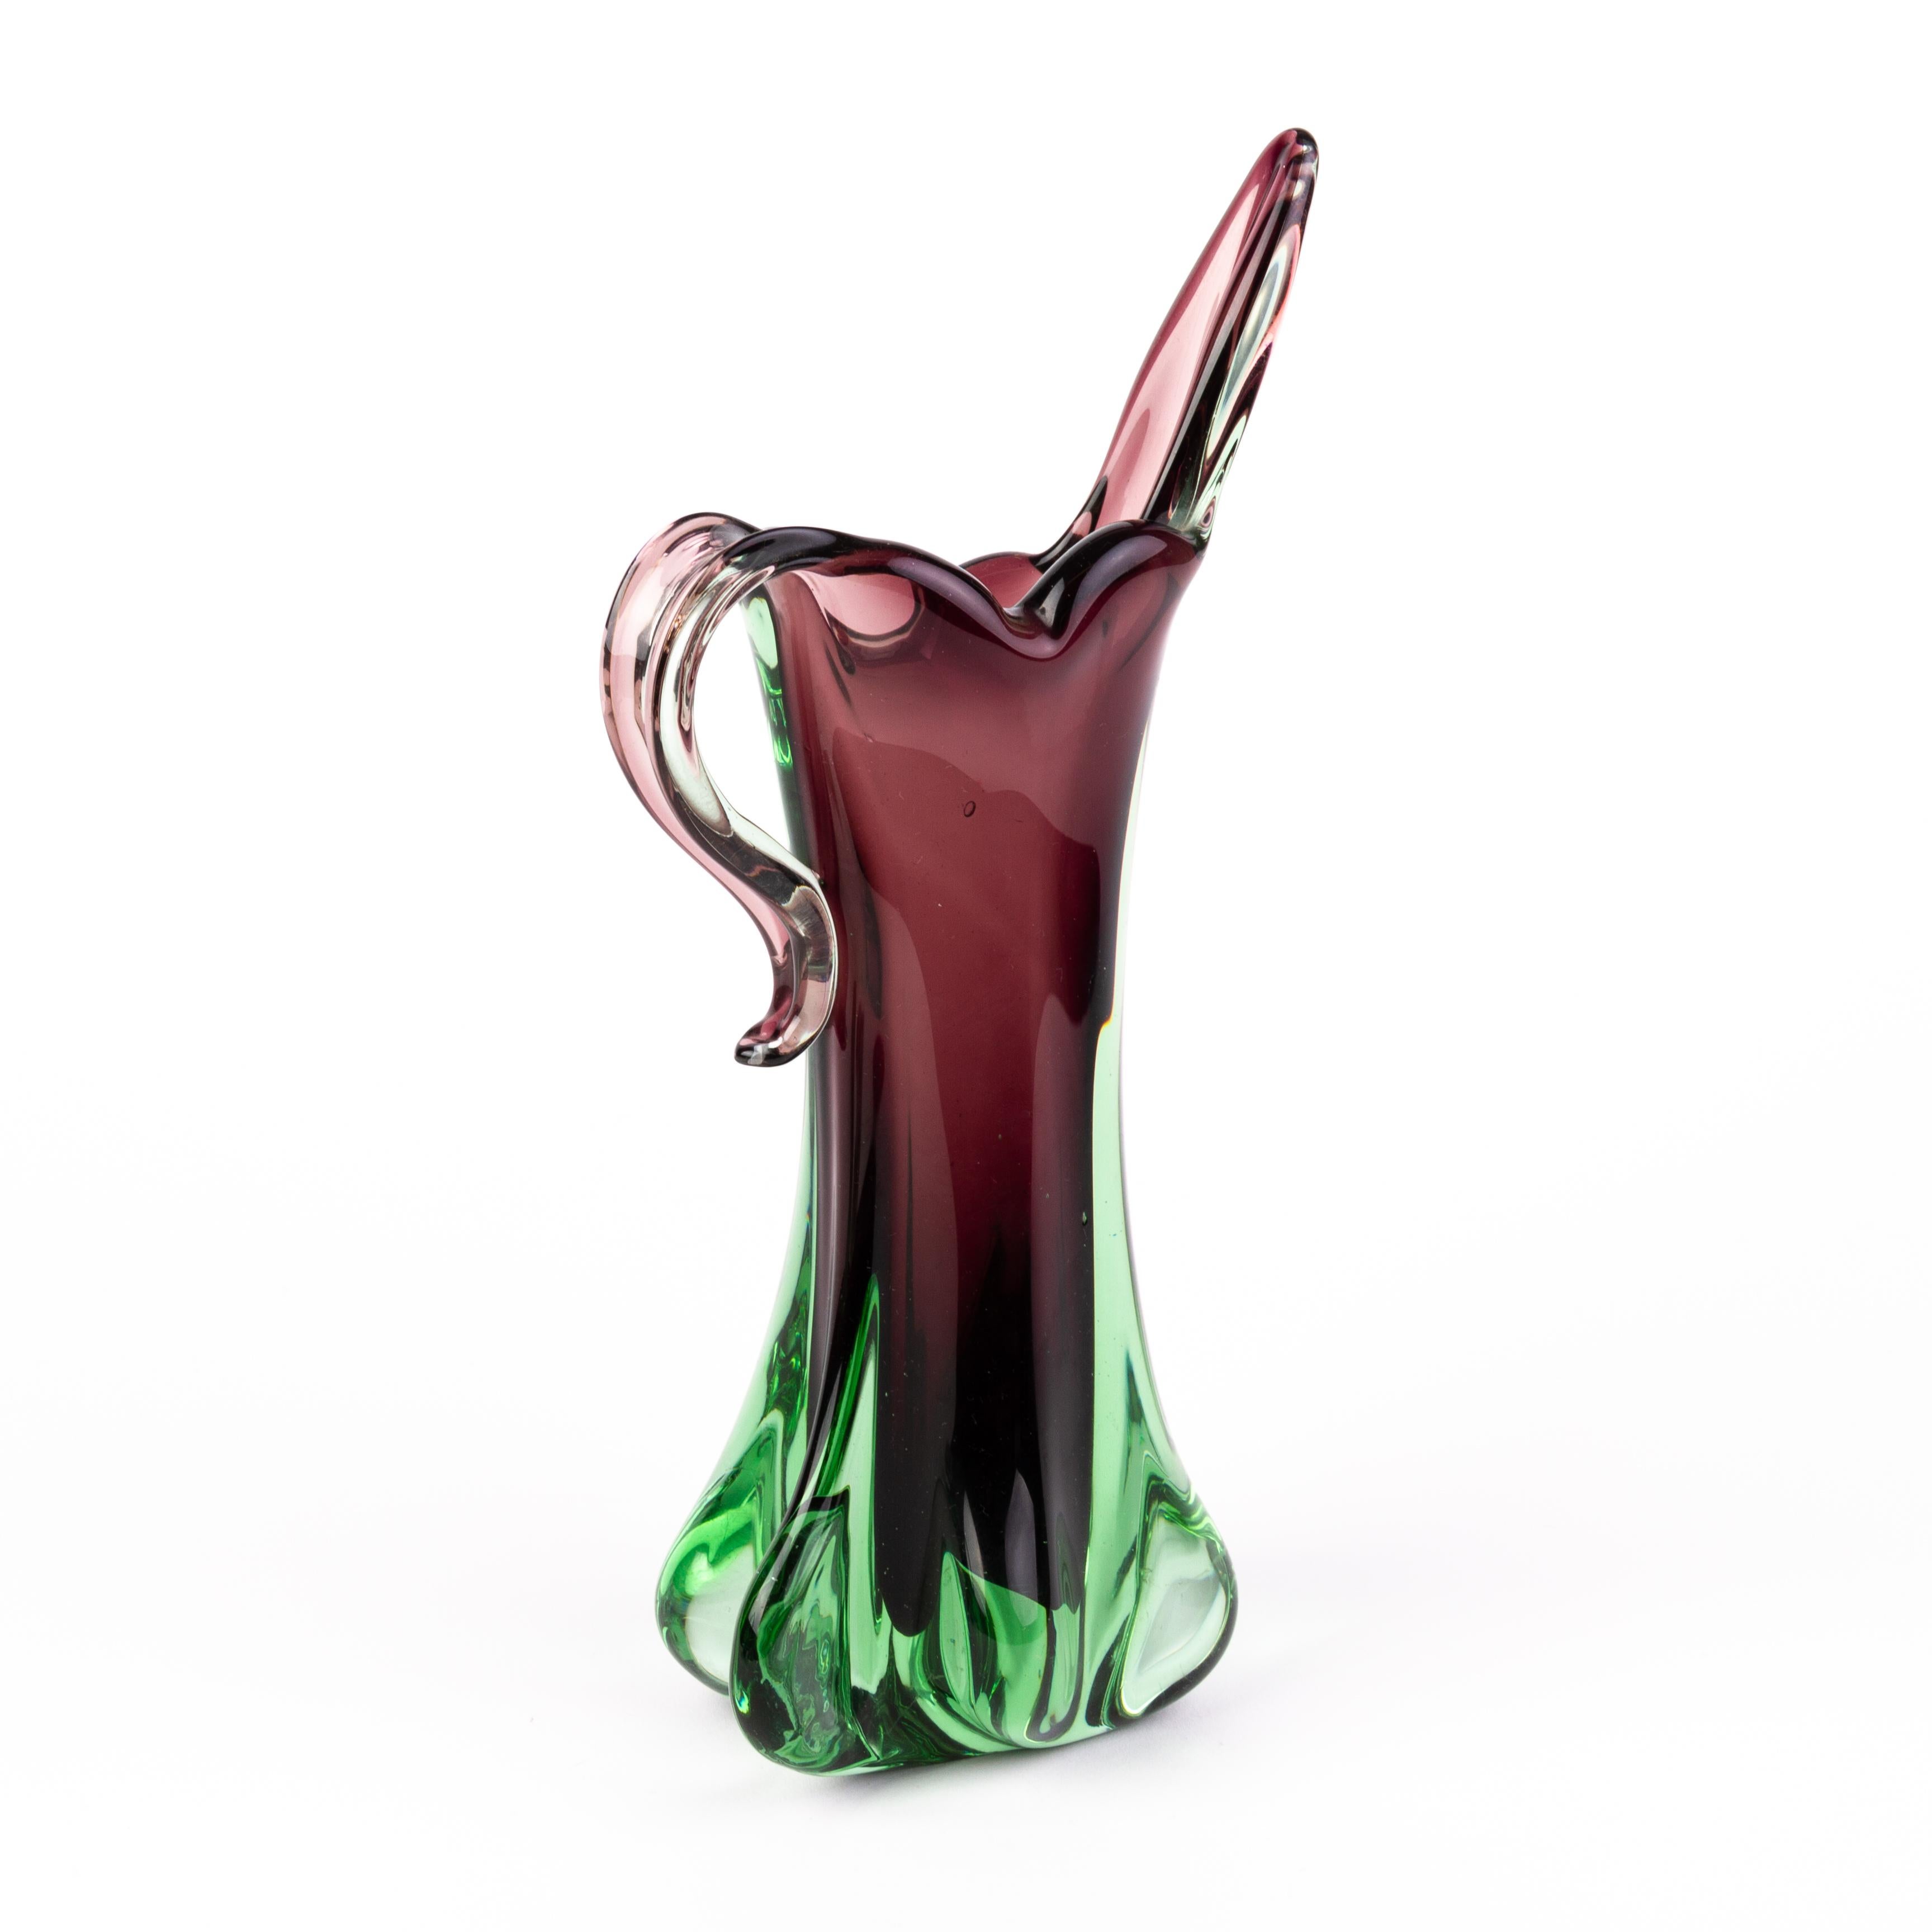 Murano Venetian Glass Designer Ewer
Good condition
Free international shipping.